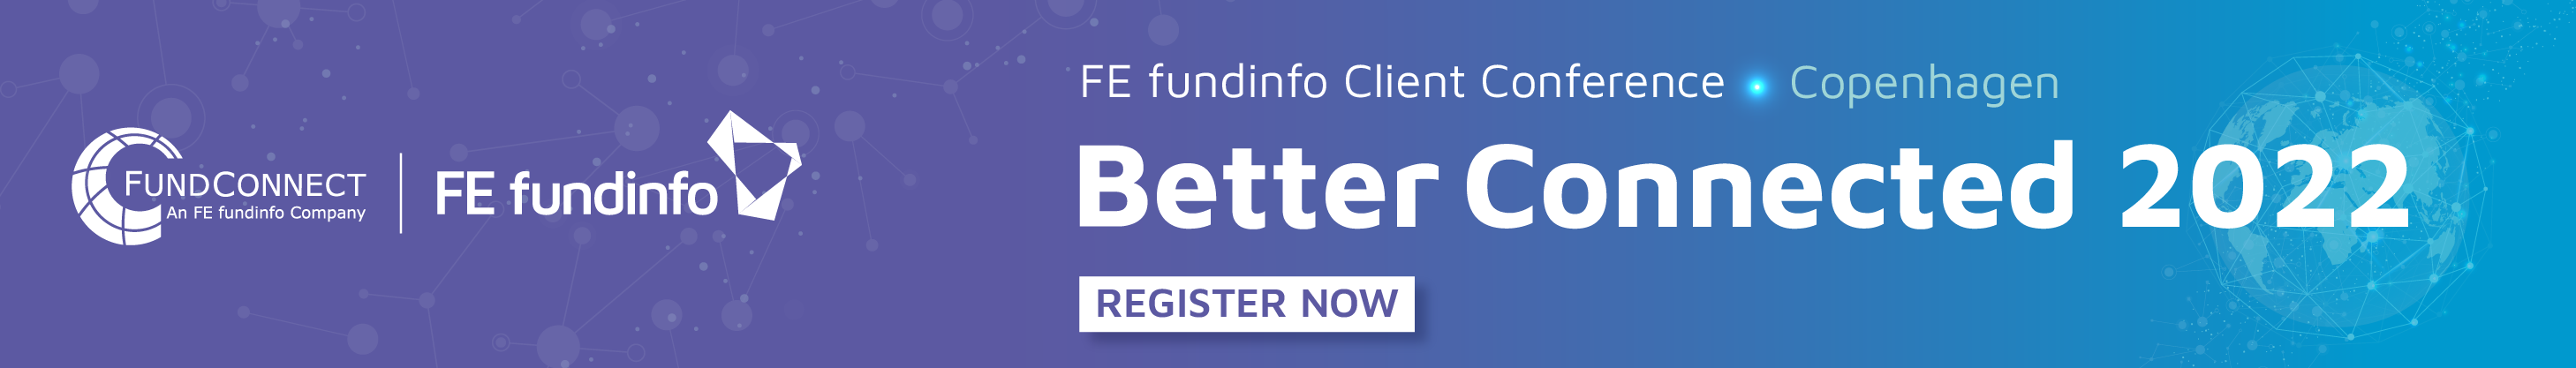 FE fundinfo Better Connected 2022